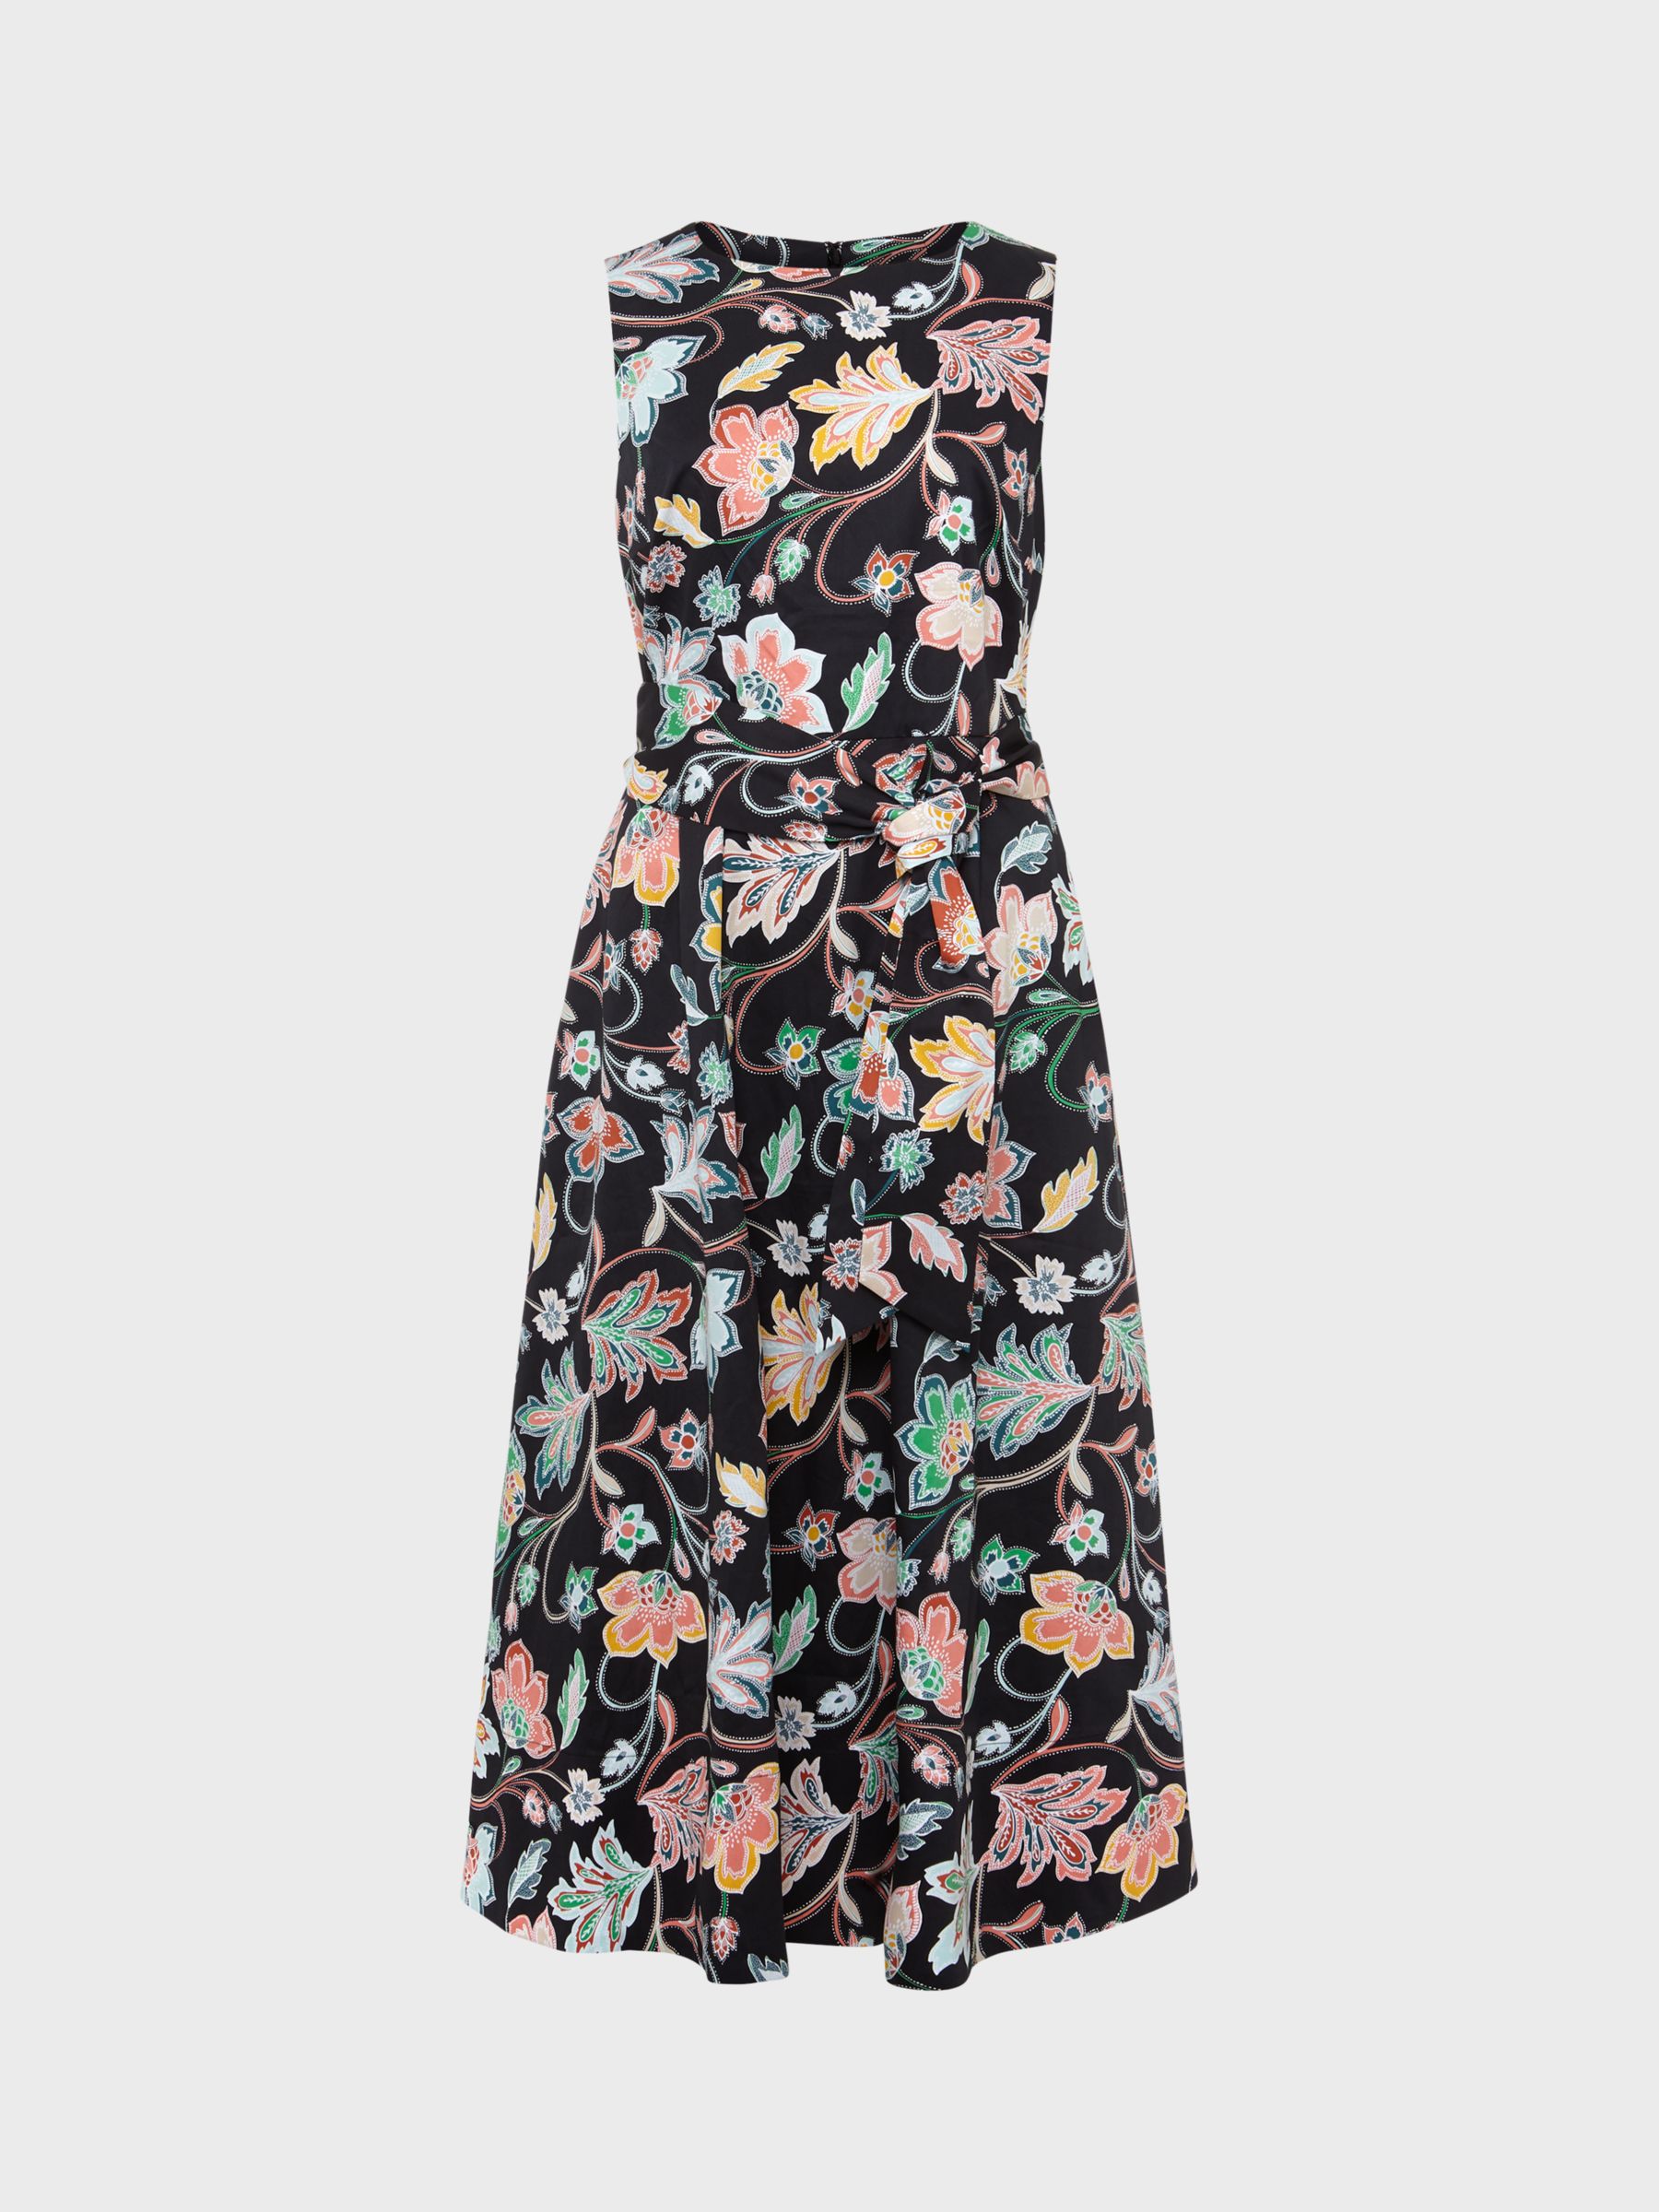 Hobbs Emilie Petite Floral Print Dress, Black/Multi, 8